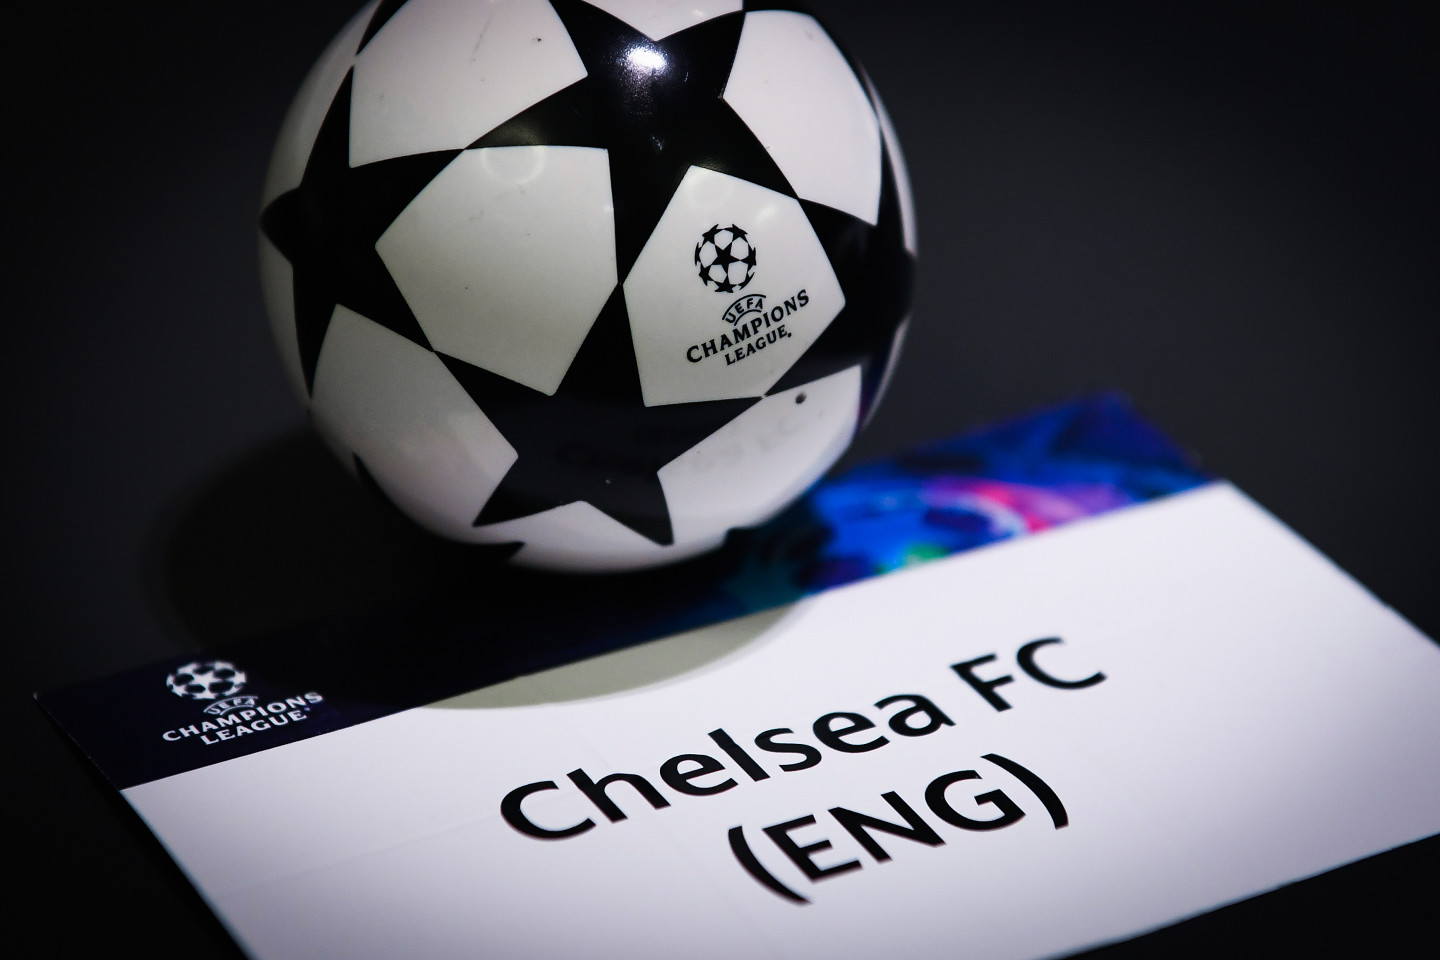 UEFA Champions League 2021 Logo Revealed - Footy Headlines